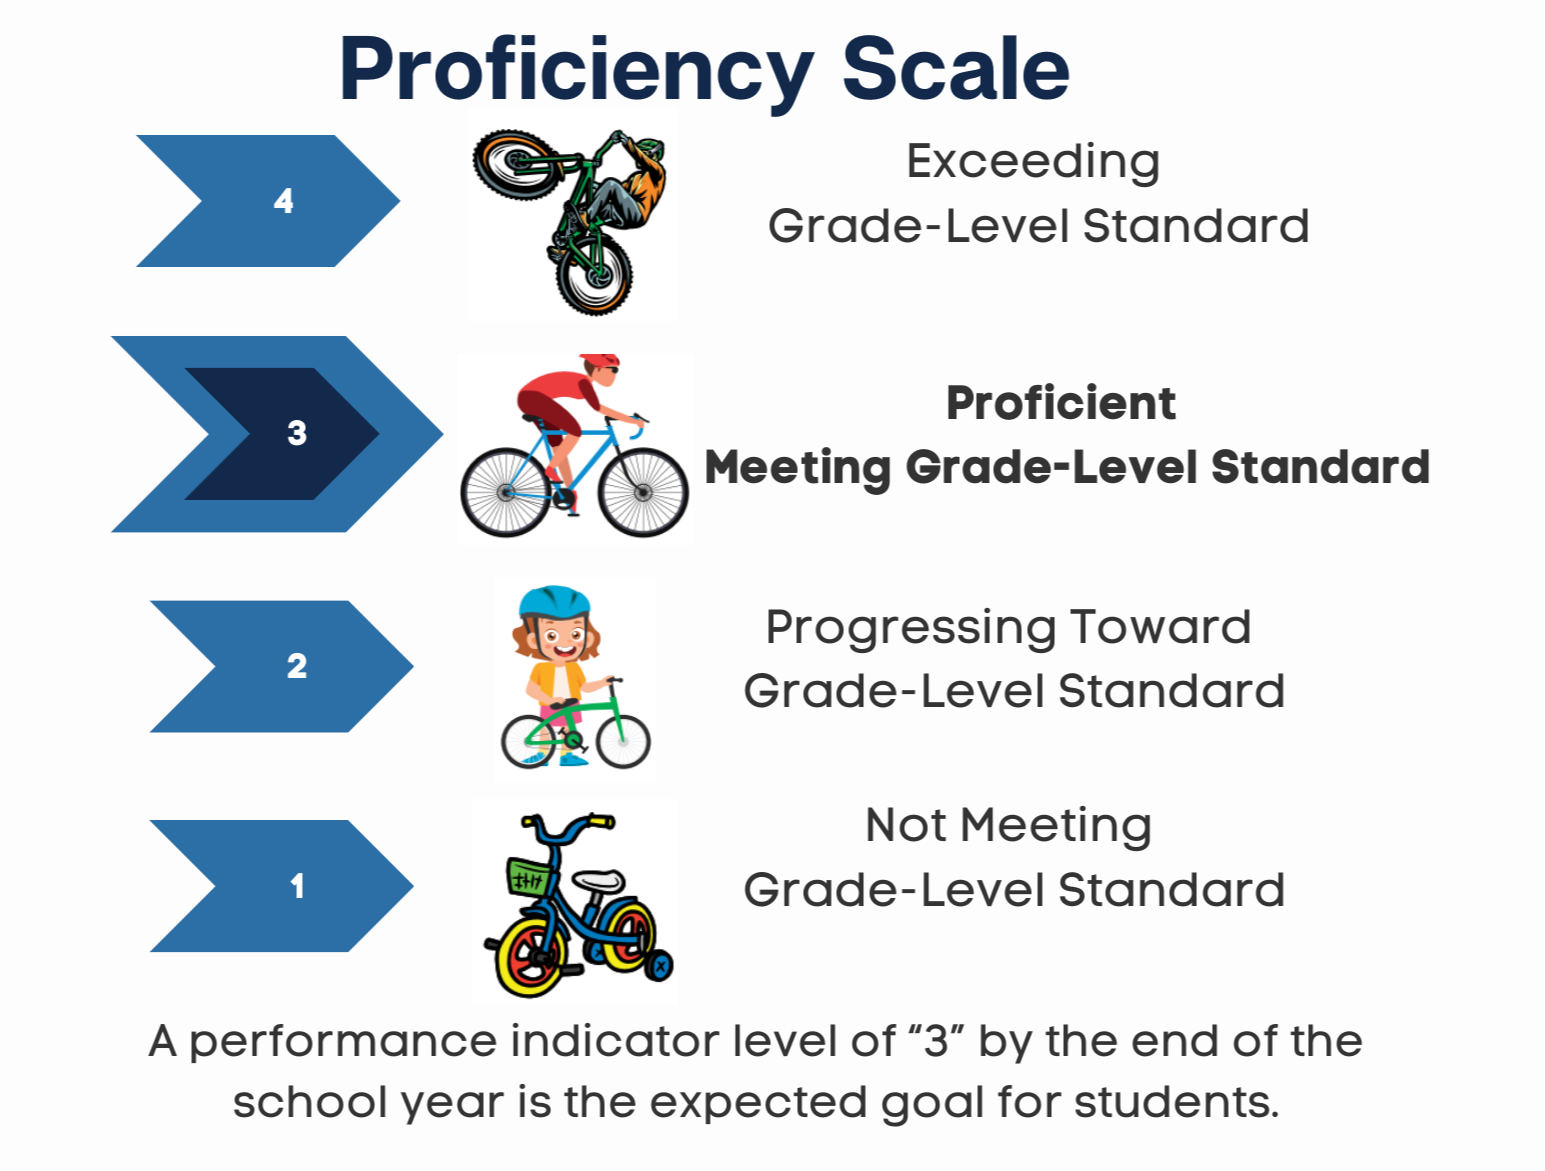 standards based grading graphic